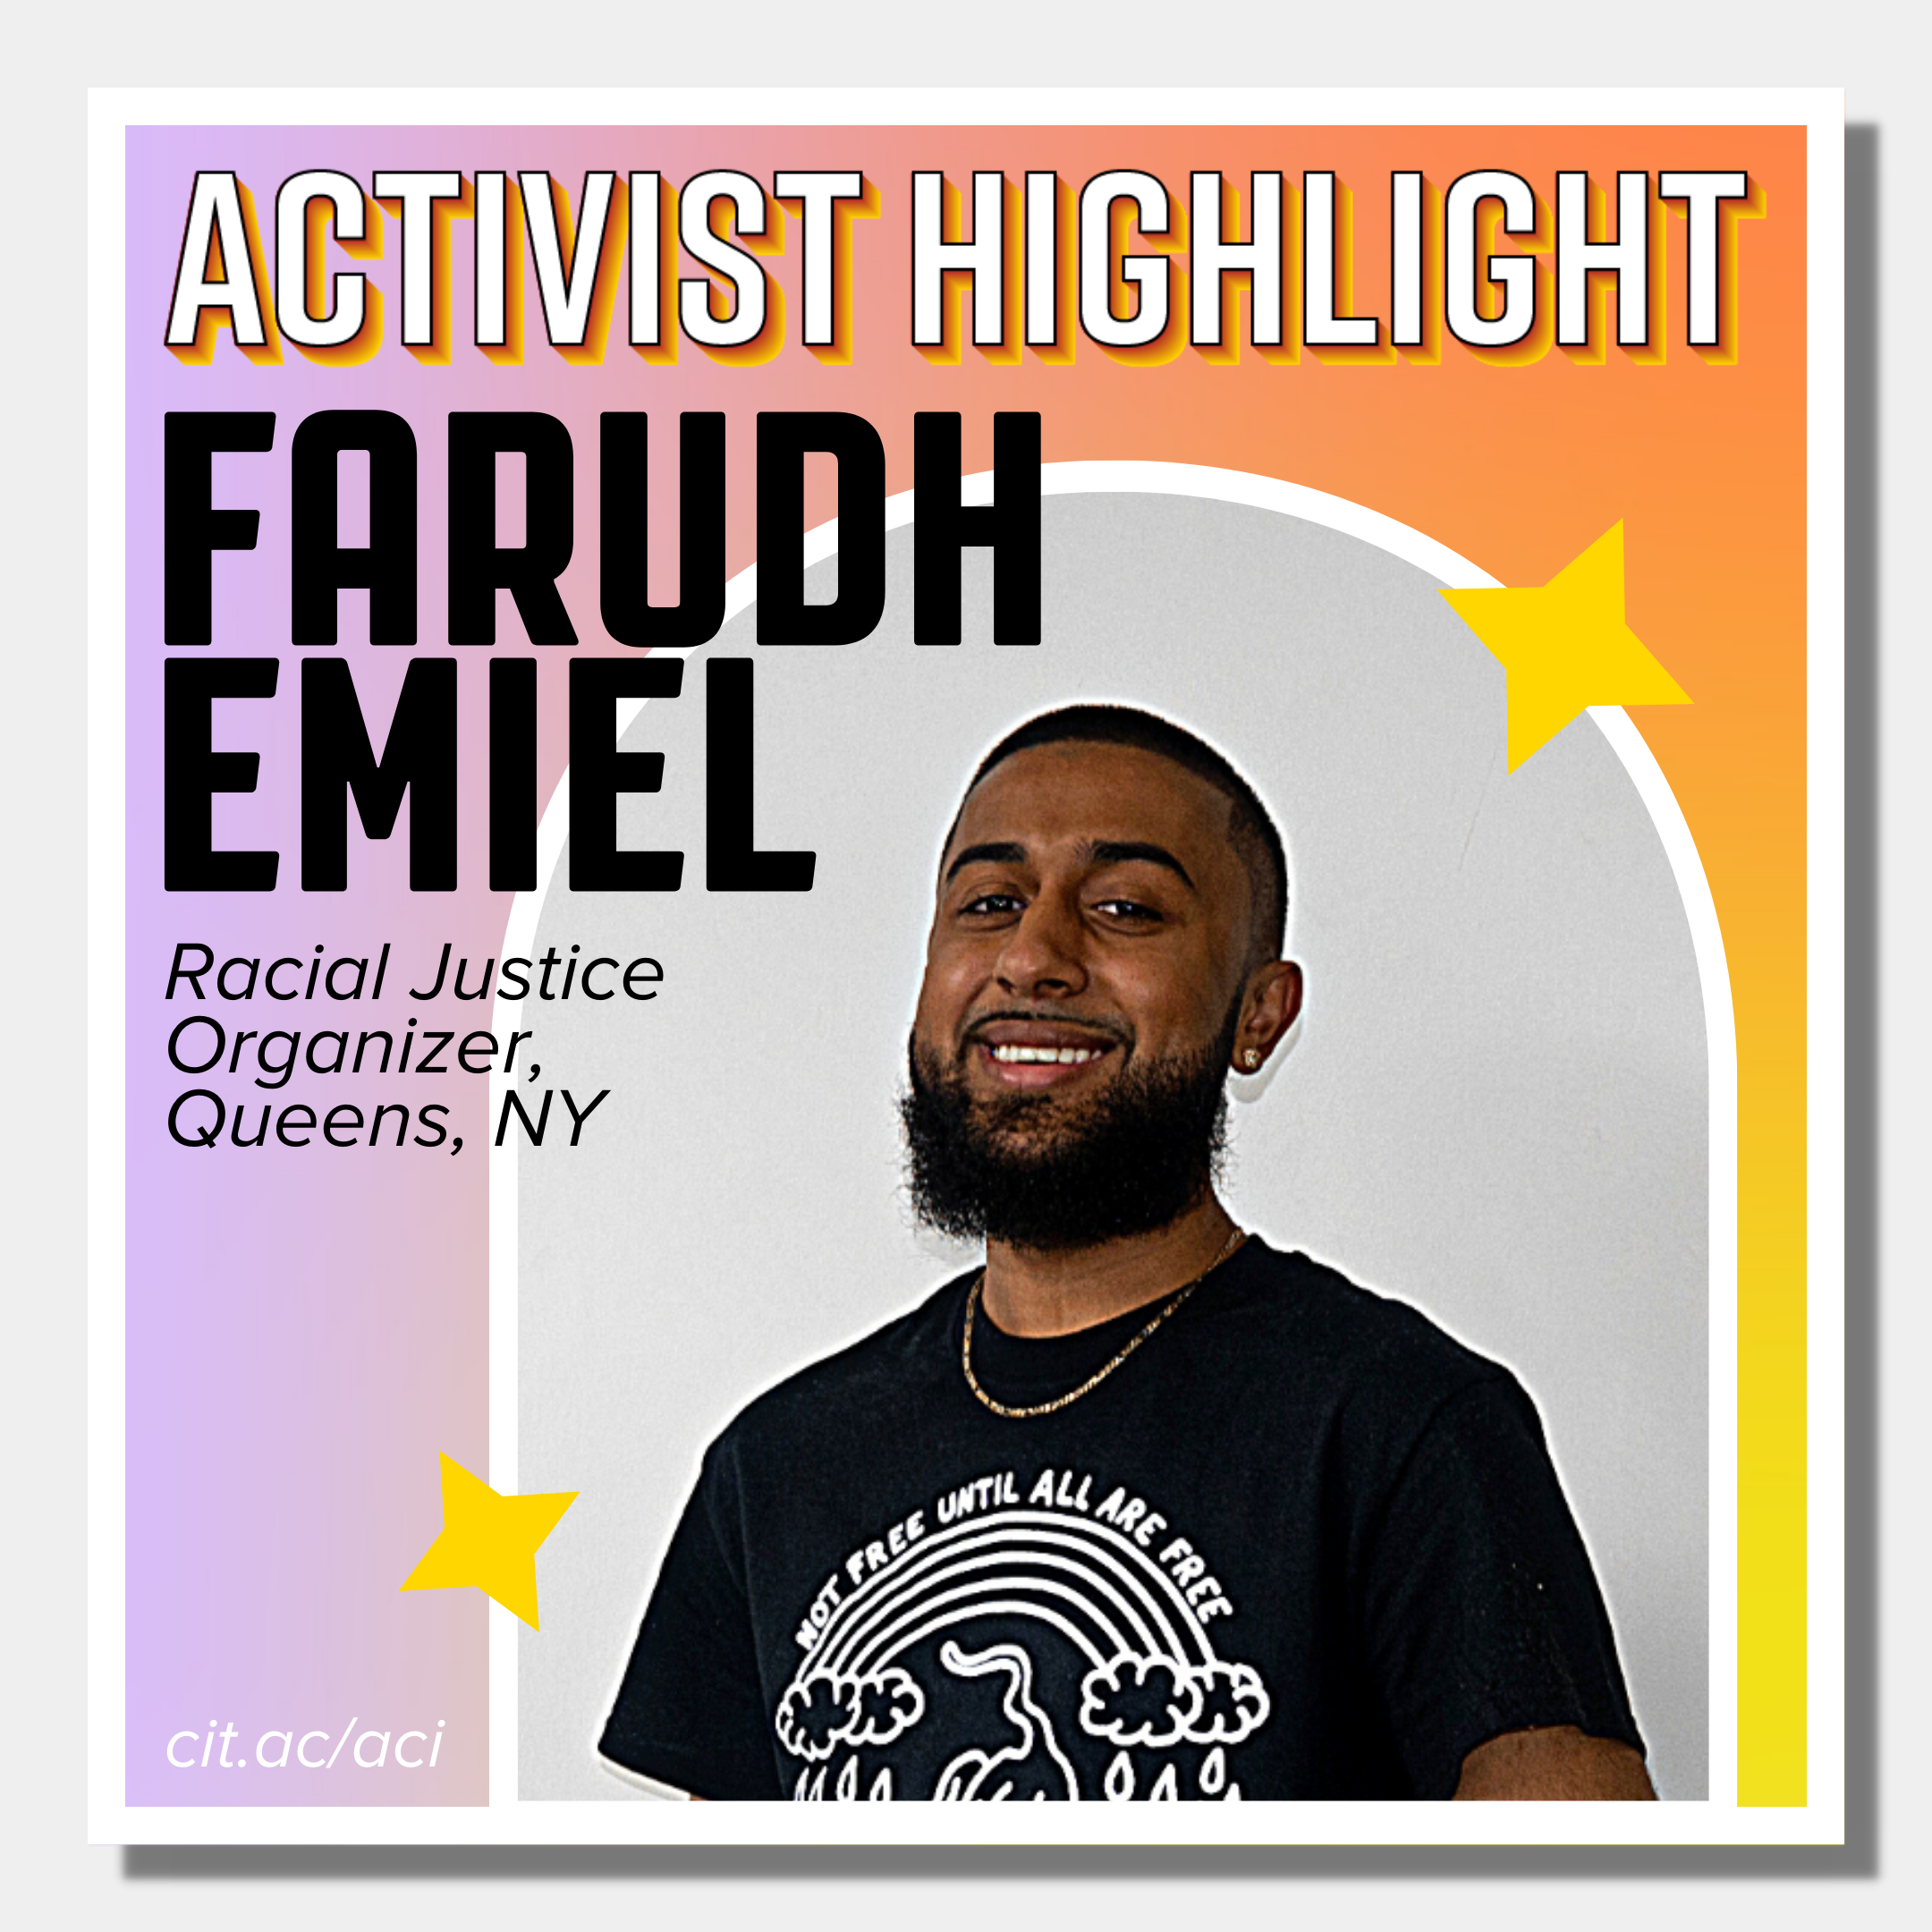 Headshot of Farudh Emiel. Text reads: Activist Highlight, Farudh Emiel. Racial Justice Organizer. Queens, NY.